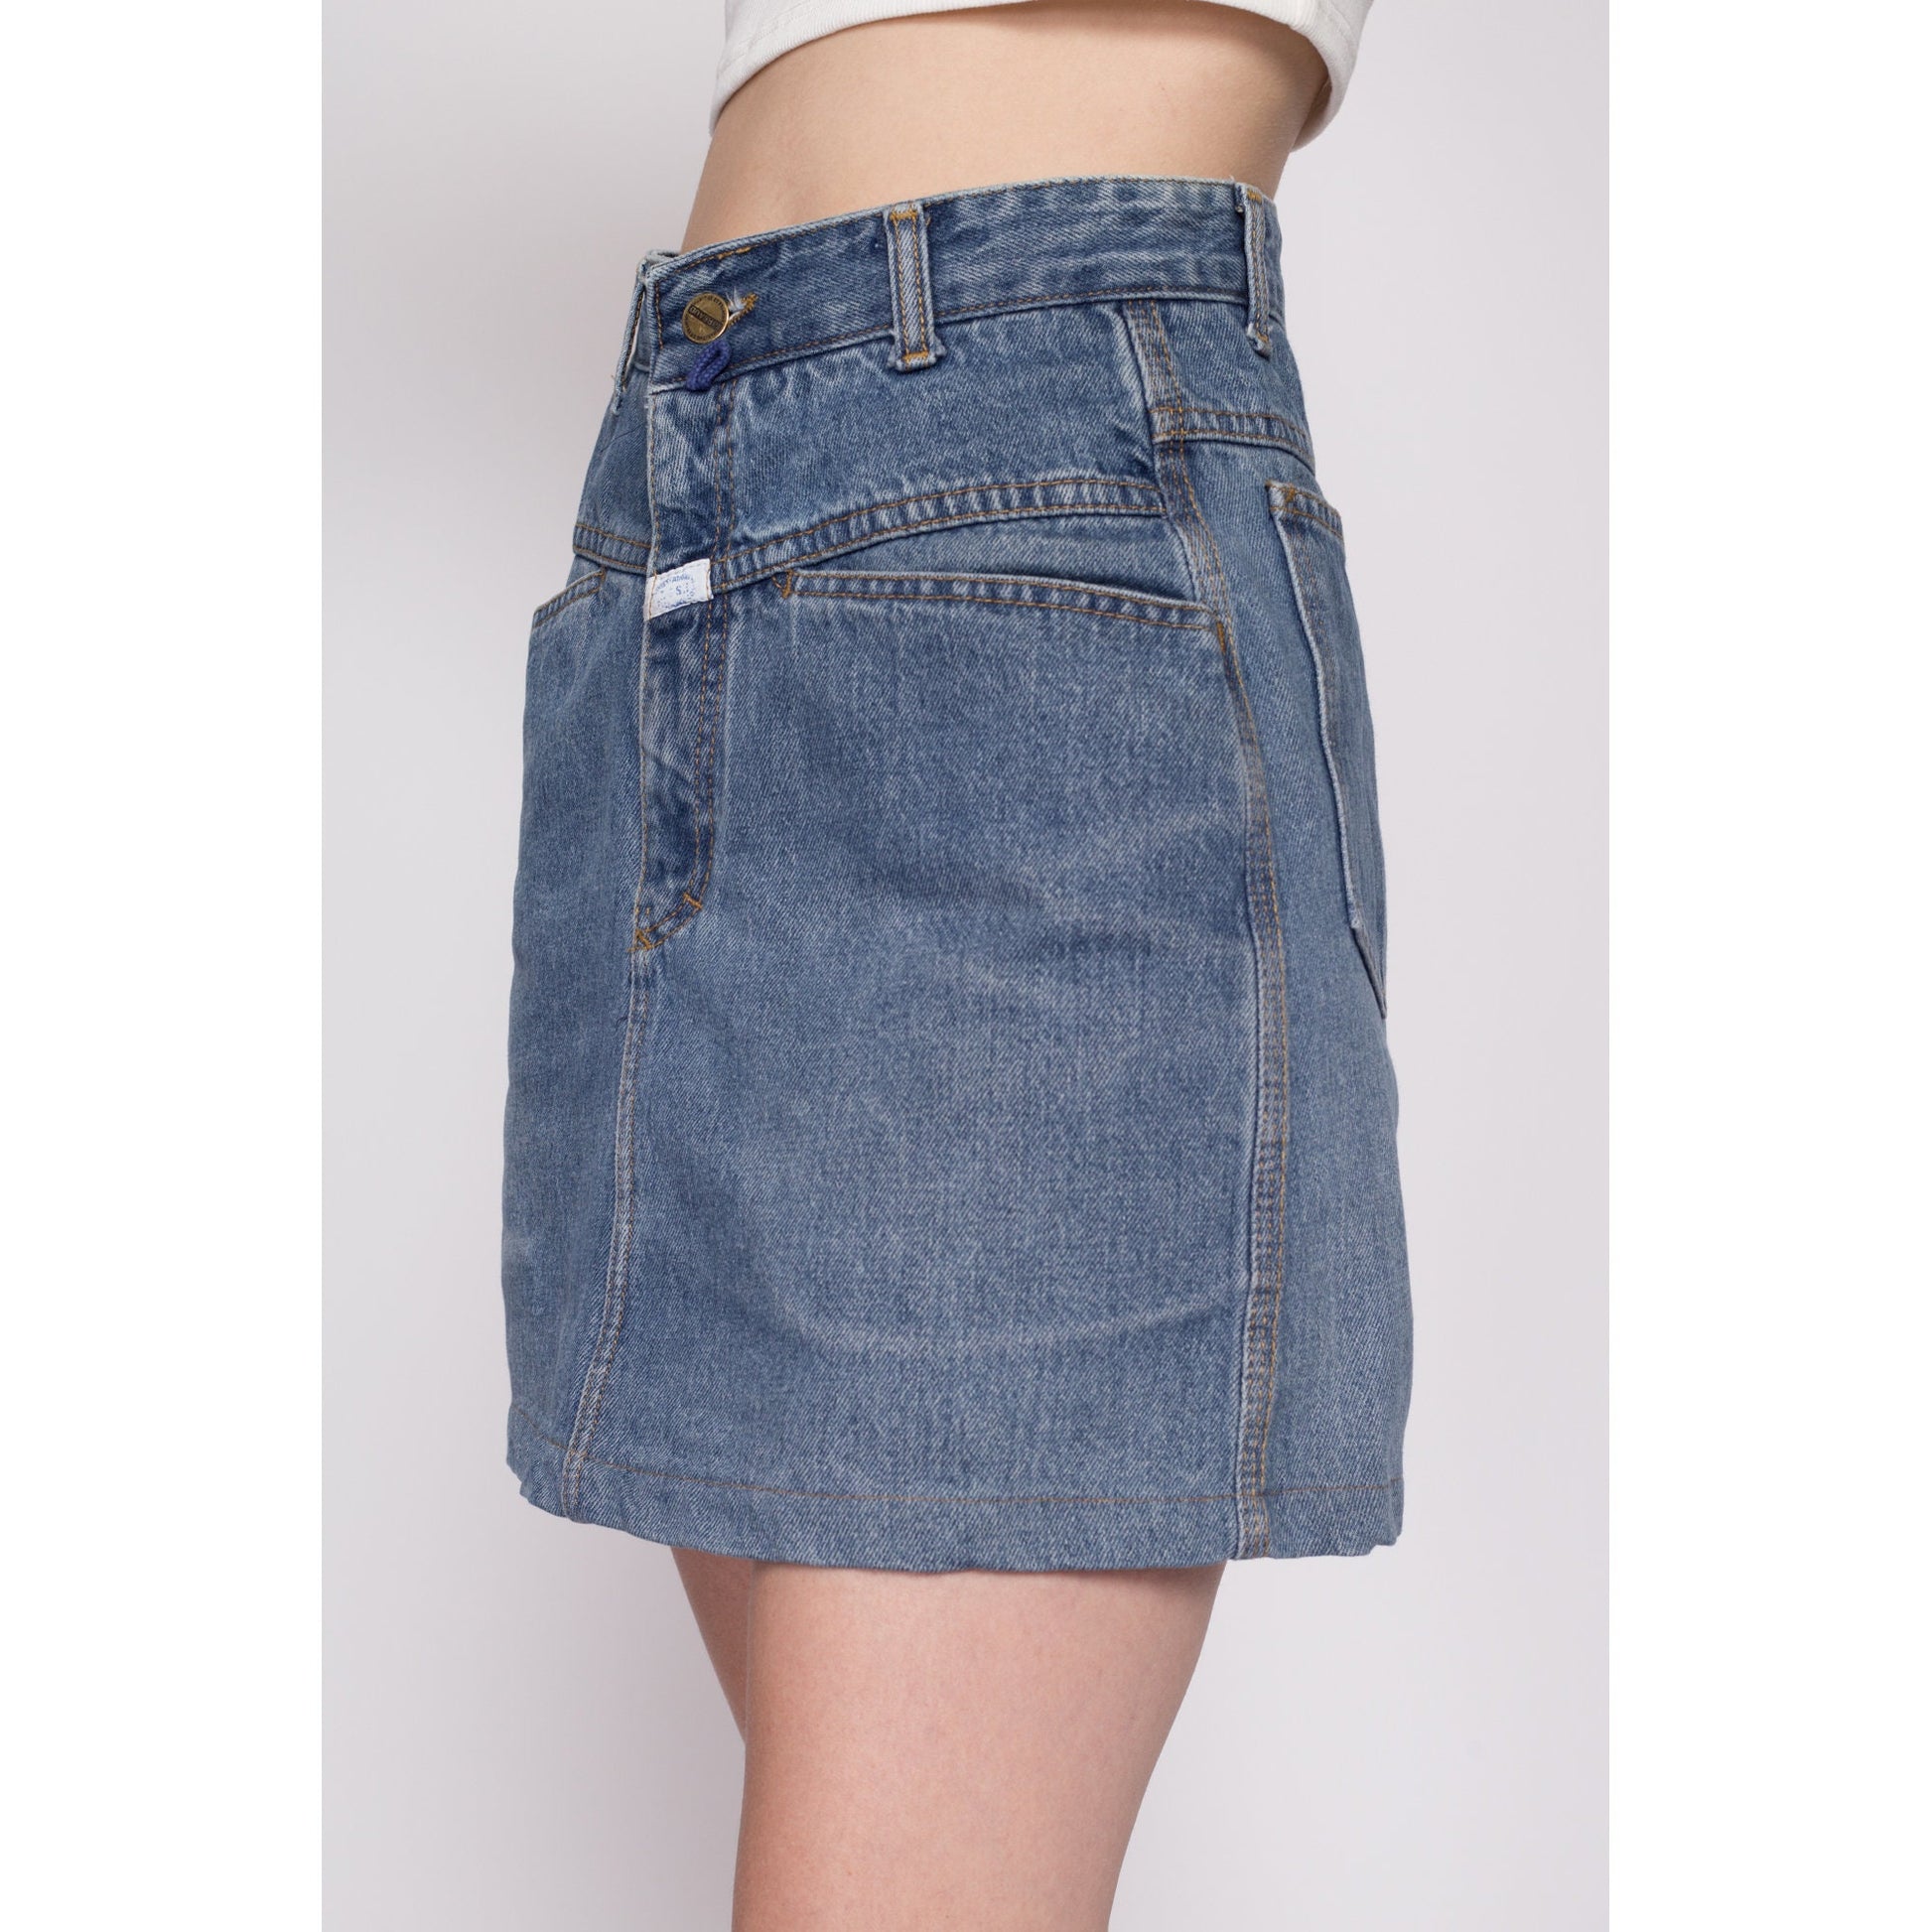 Small 90s Marithe Francois Girbaud Jean Mini Skirt 26" | Vintage Complements MFG Designer High Waisted A Line Denim Skirt